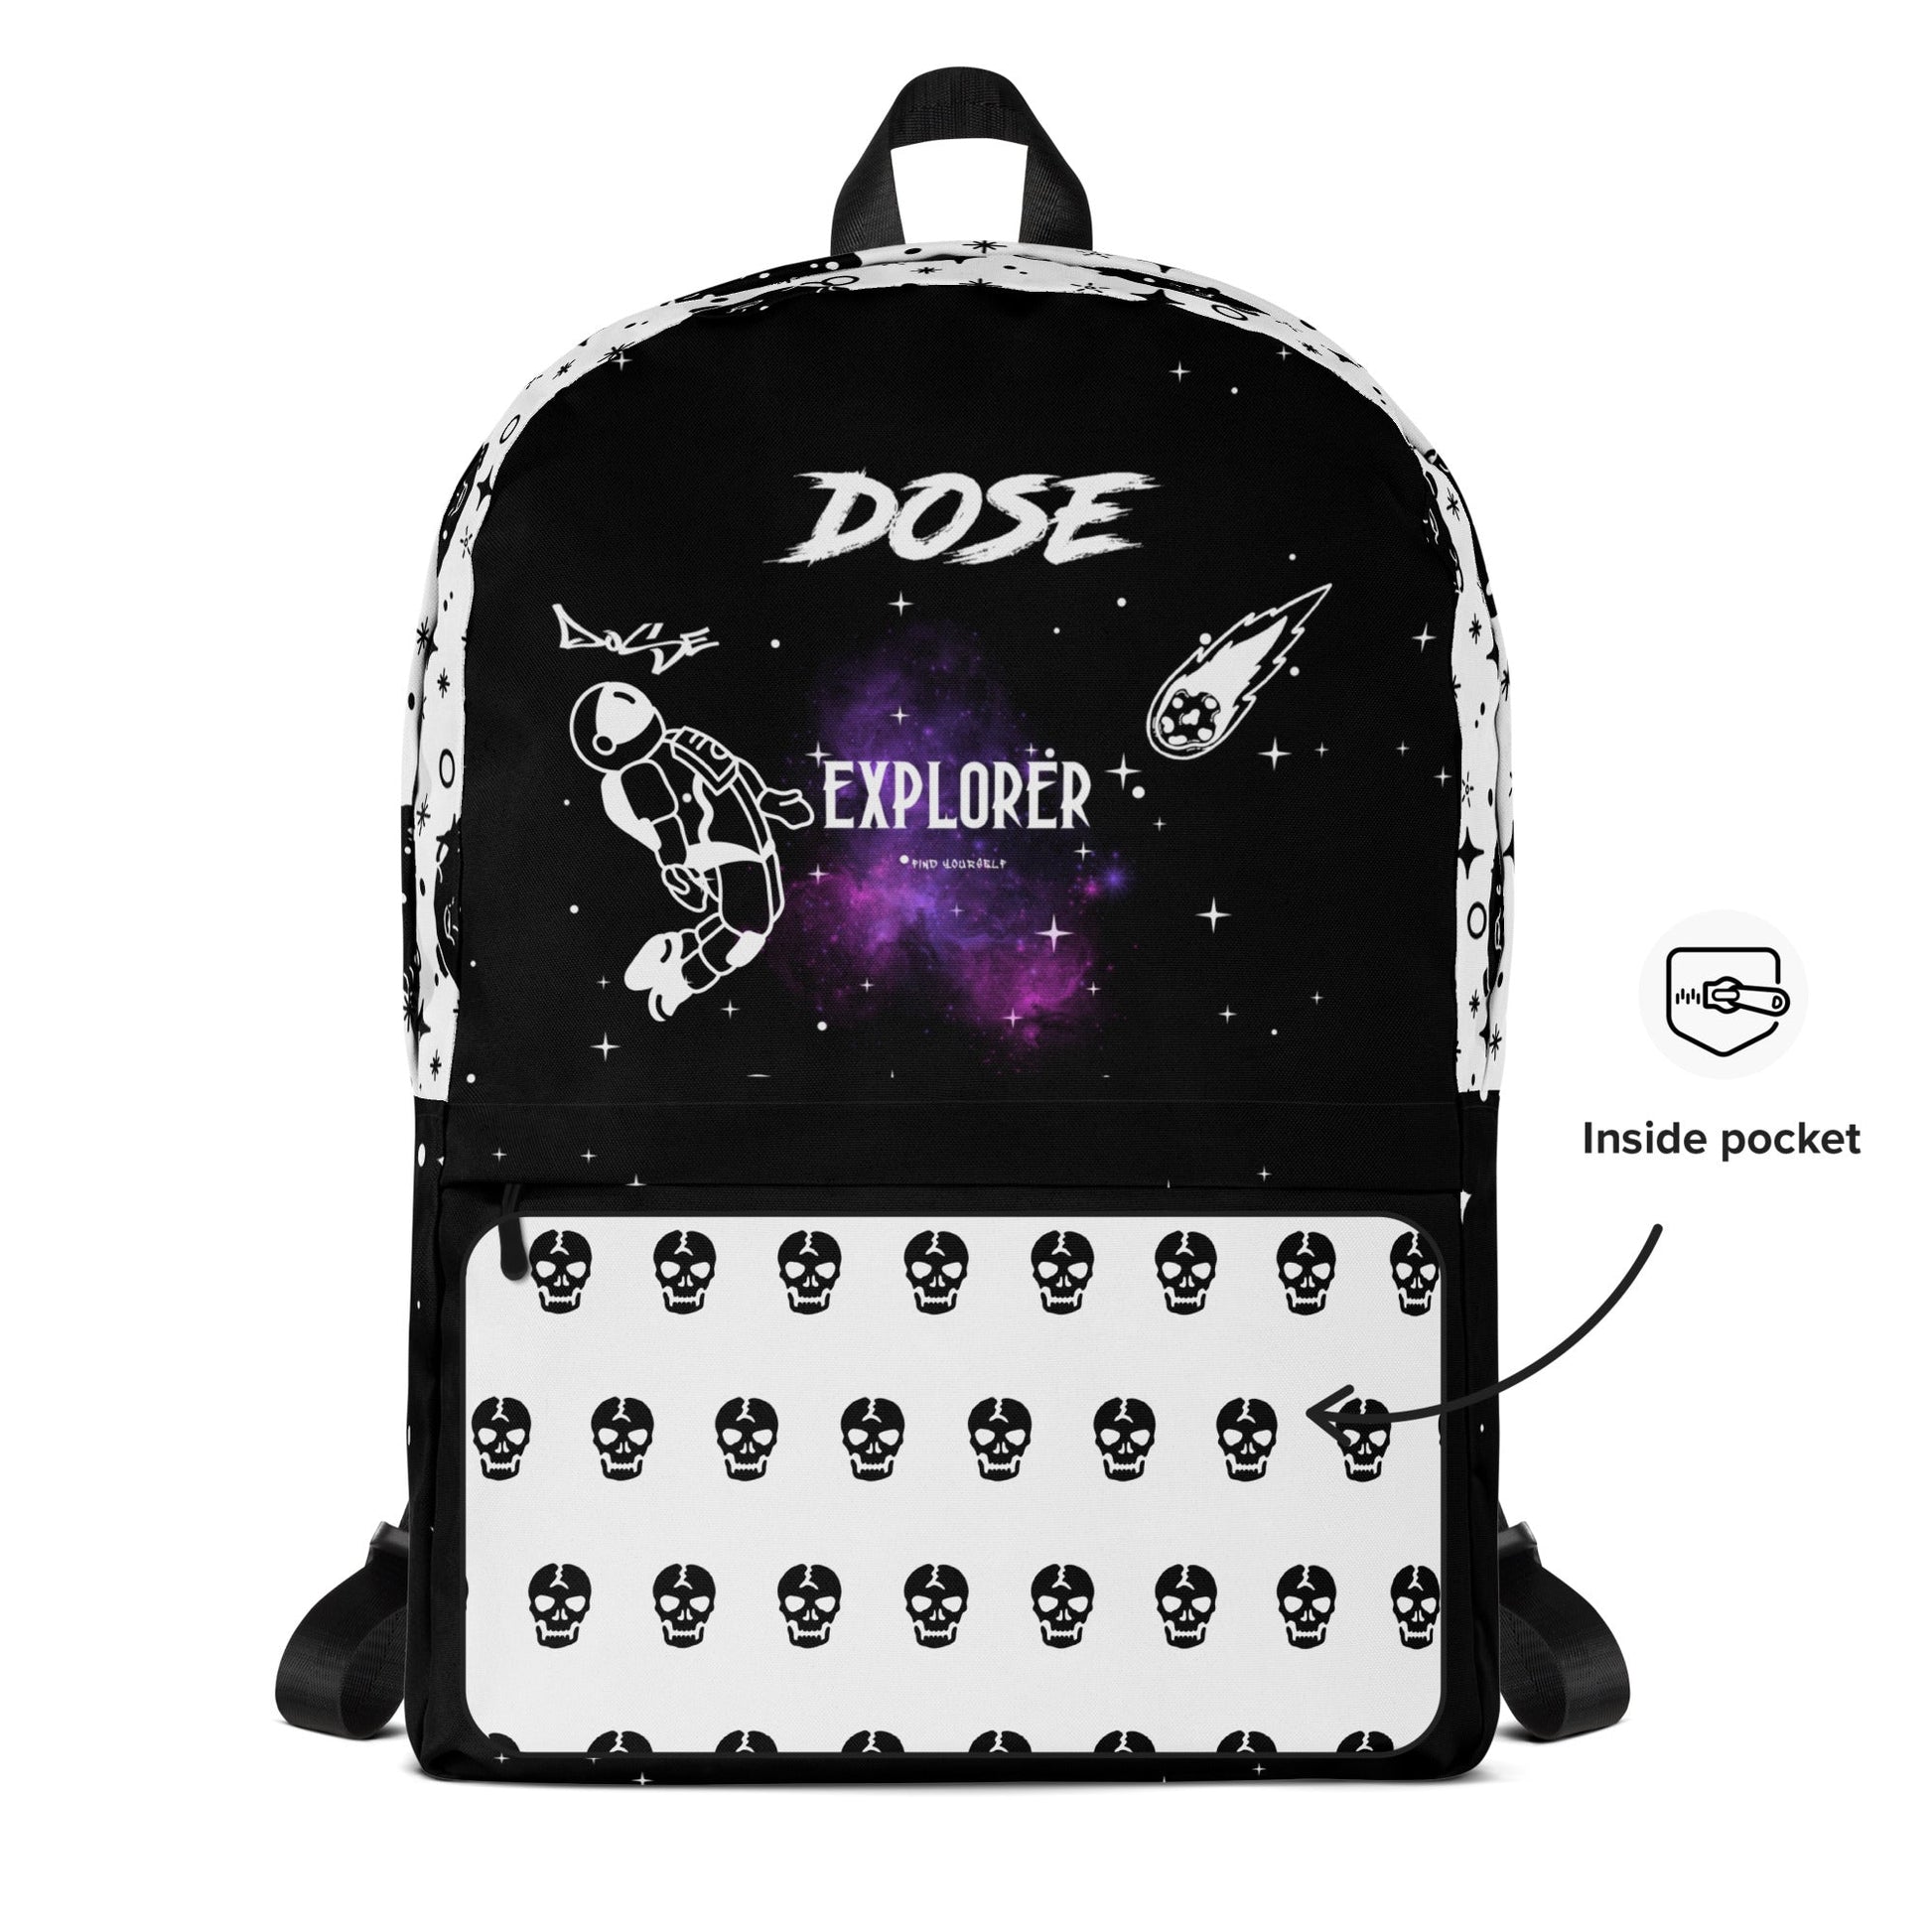 Backpack - Dose